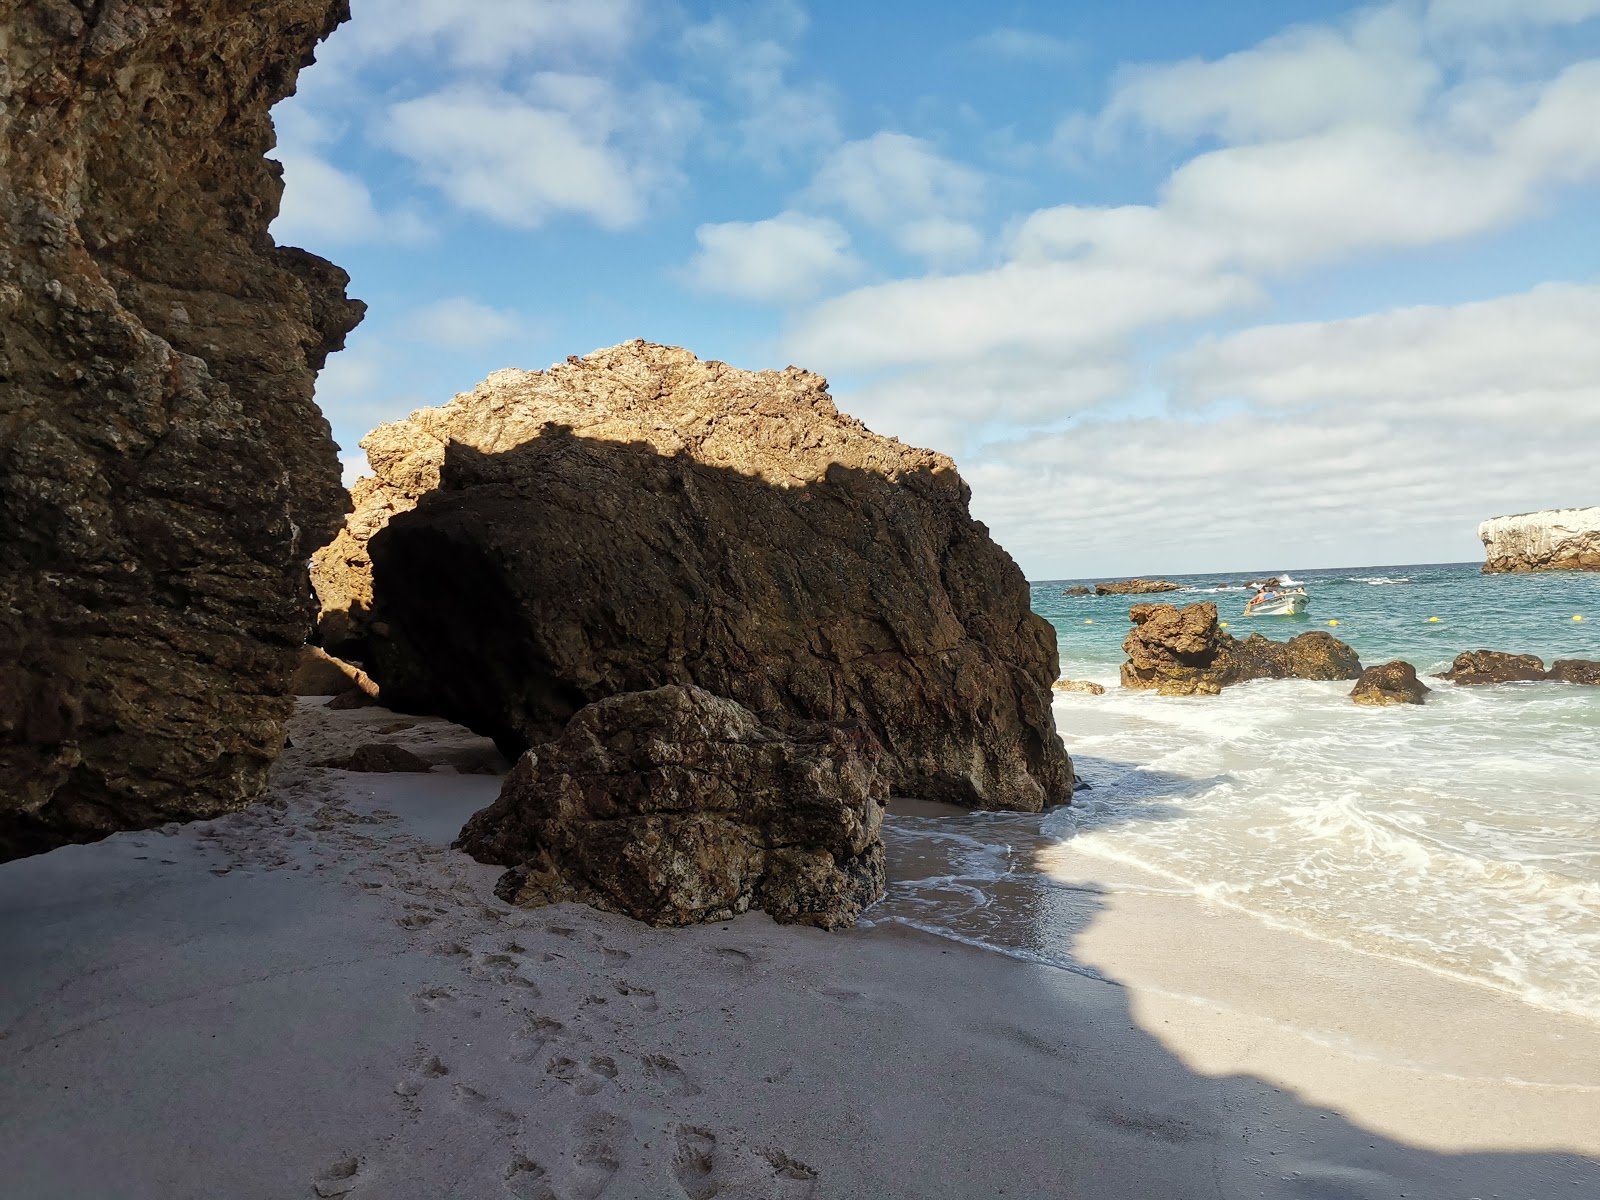 Photo of Playa la nopalera beach located in natural area